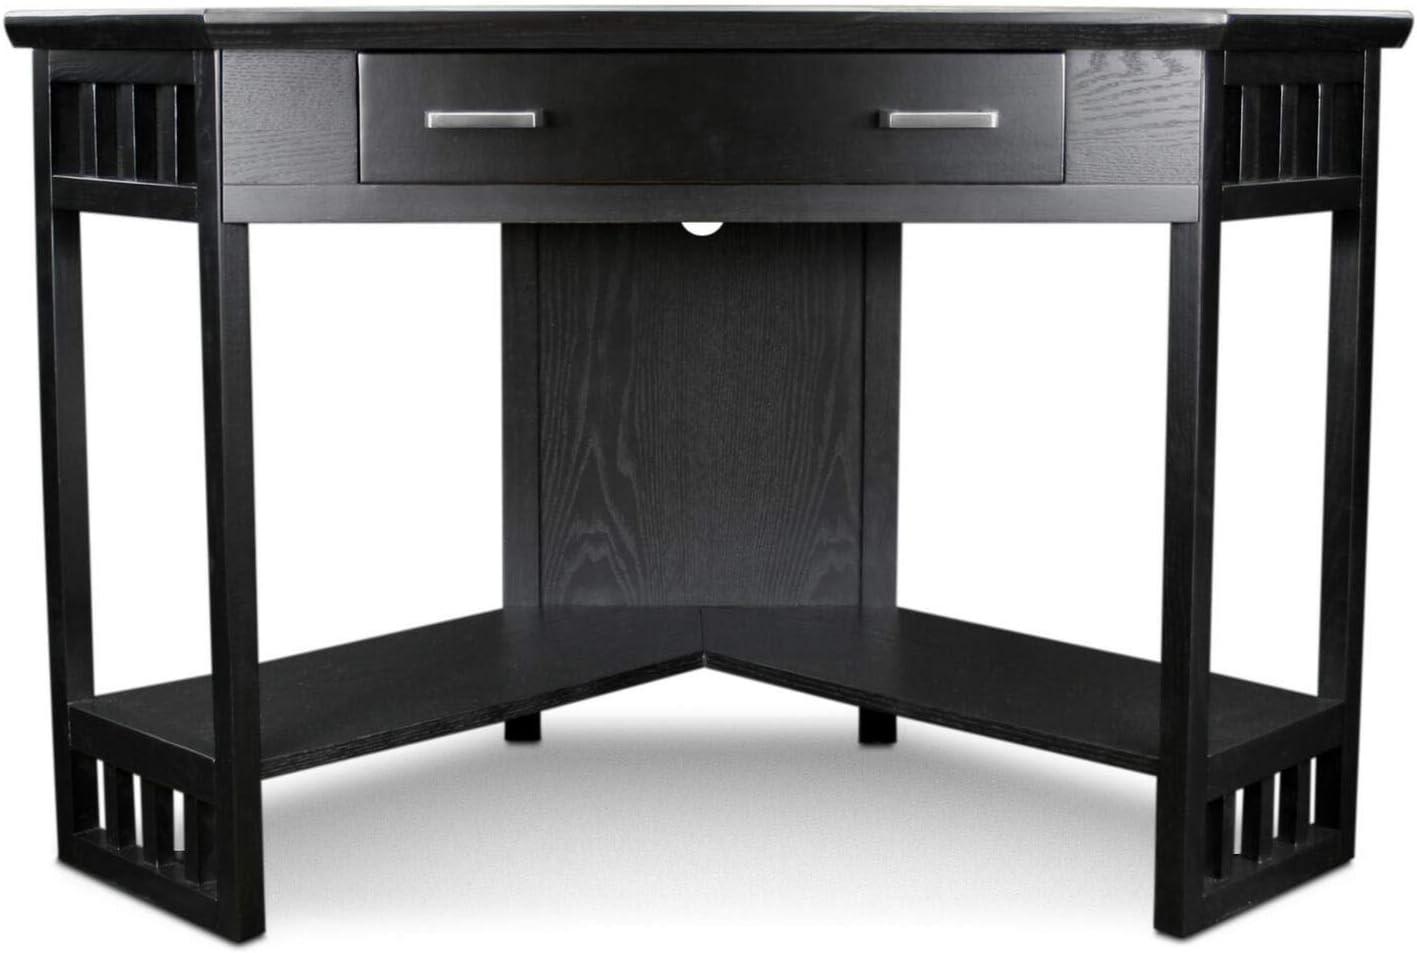 Elegant Black Oak Corner Writing Desk with Drawer and Keyboard Tray